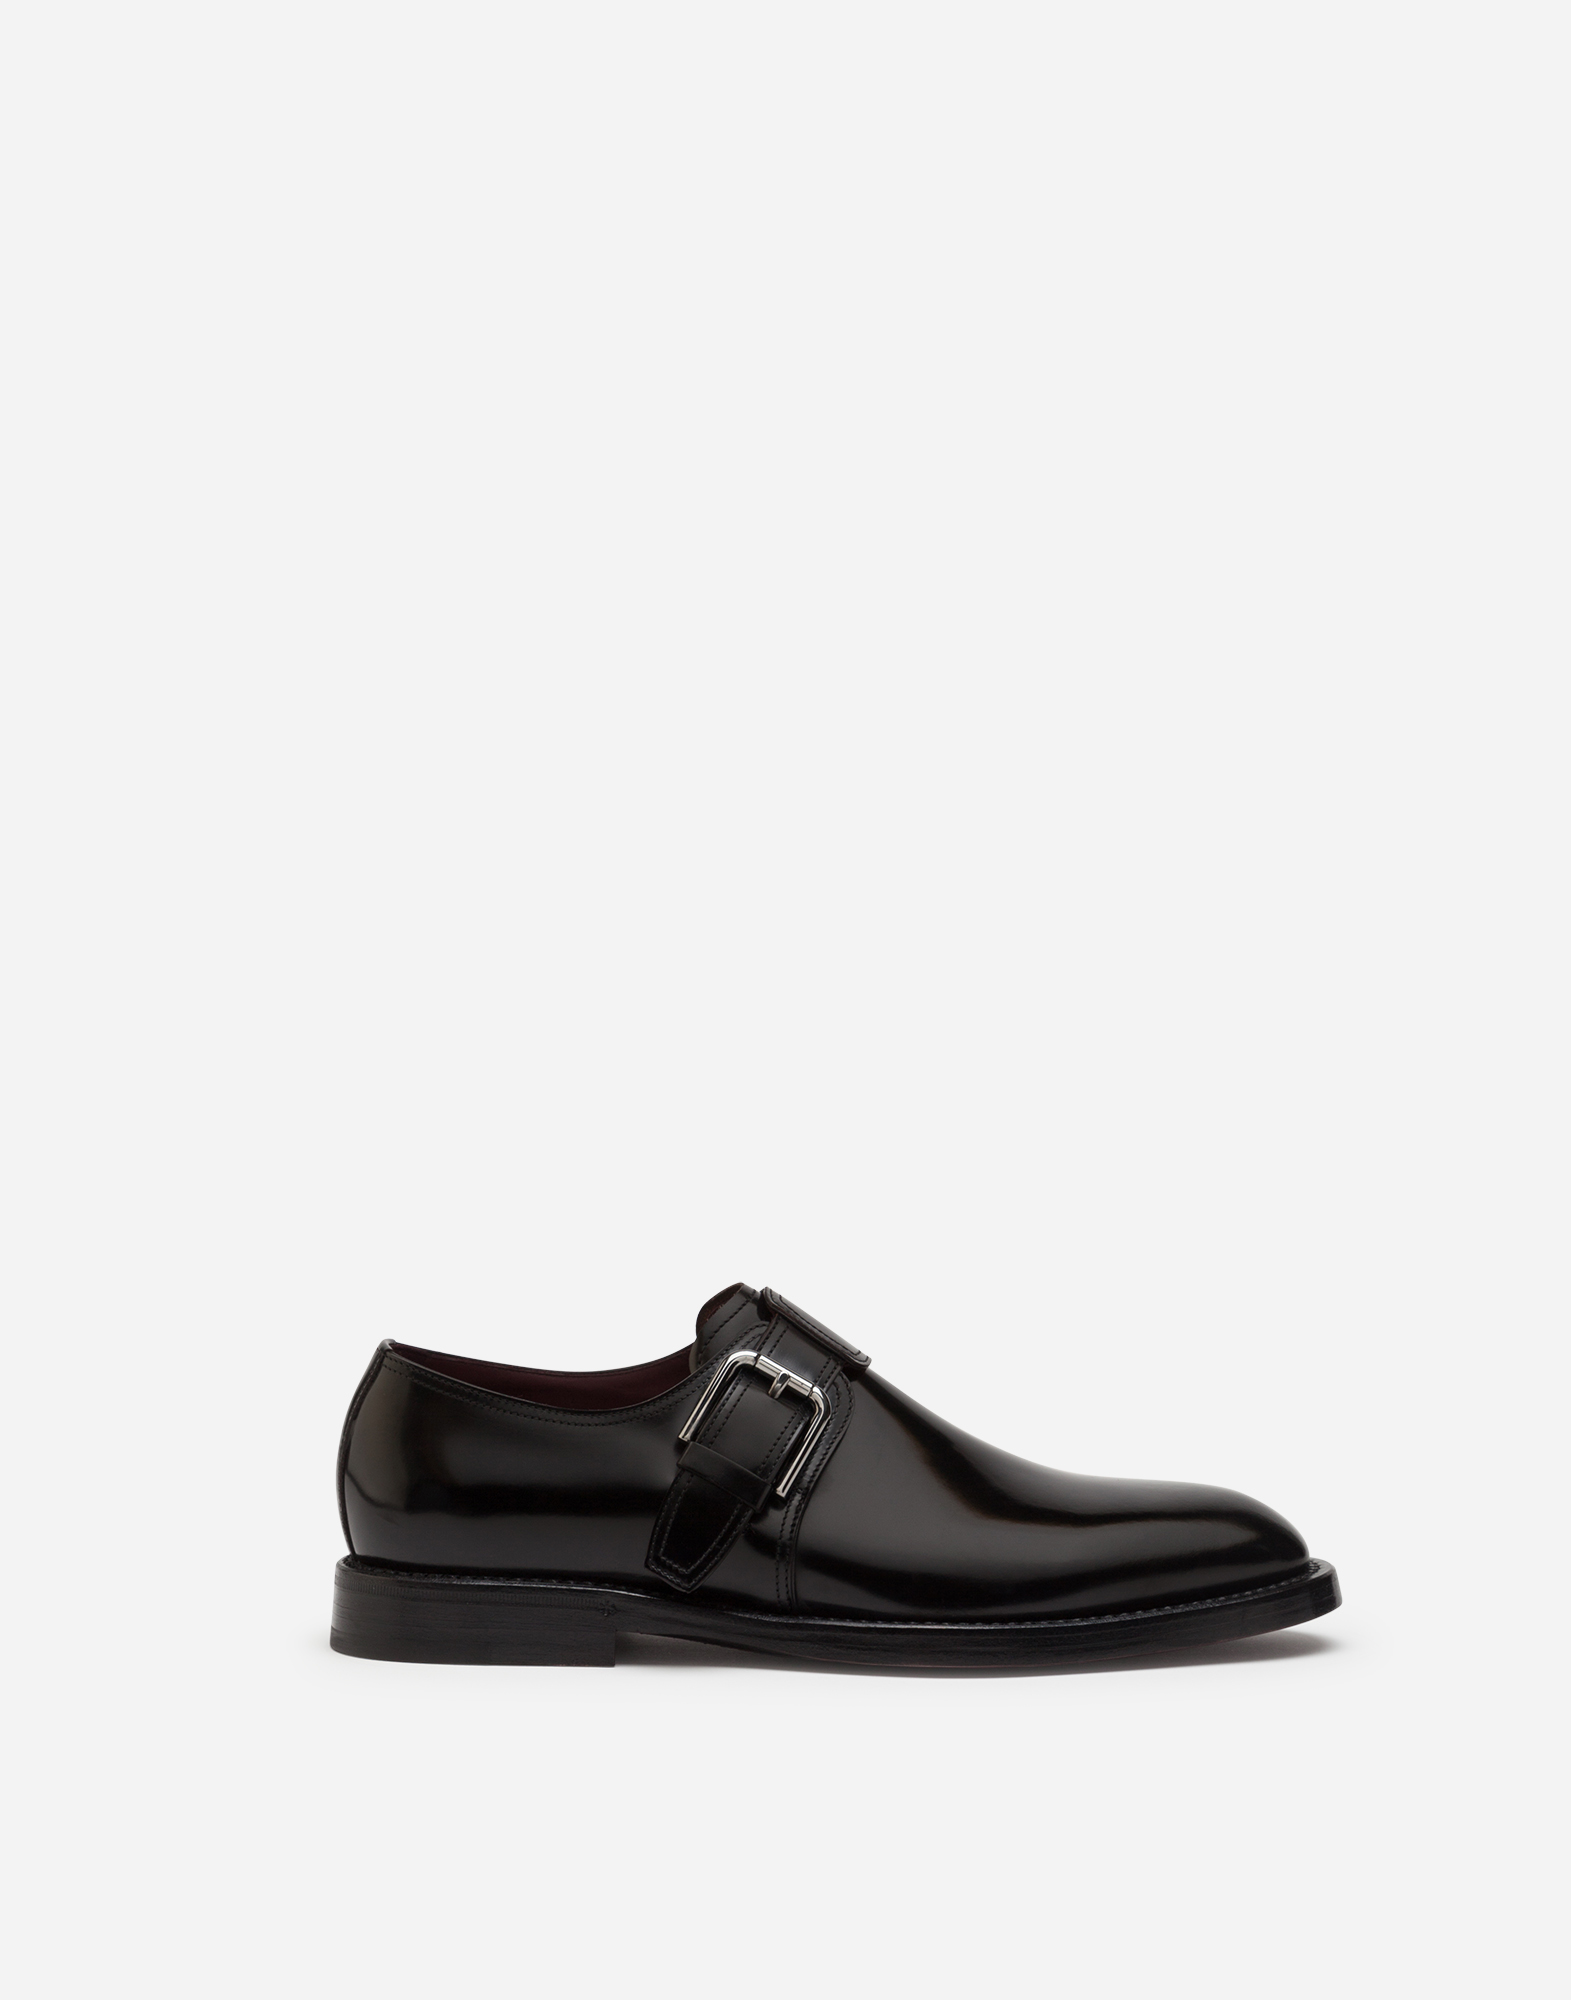 Brushed calfskin monk strap shoes in Black